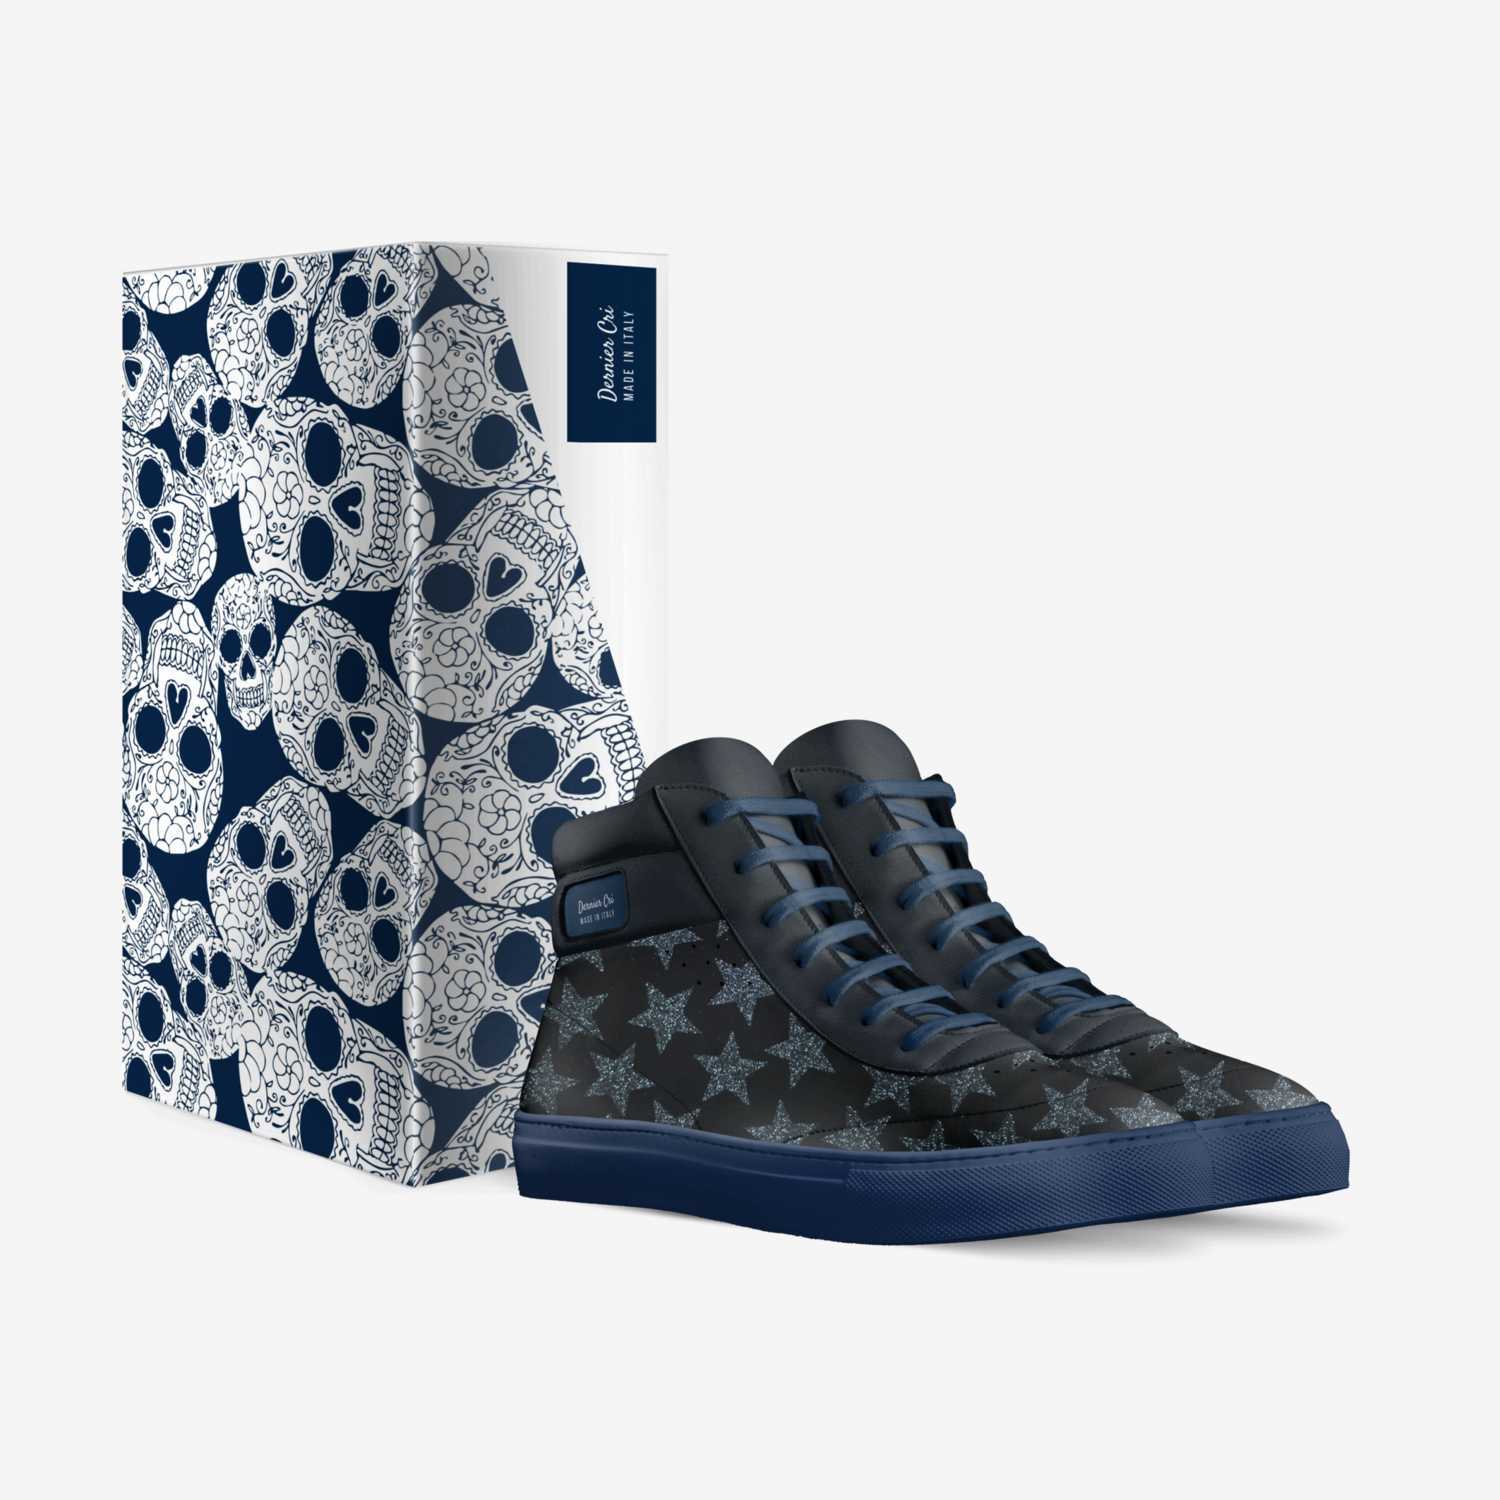 Dernier Cri custom made in Italy shoes by Te White | Box view